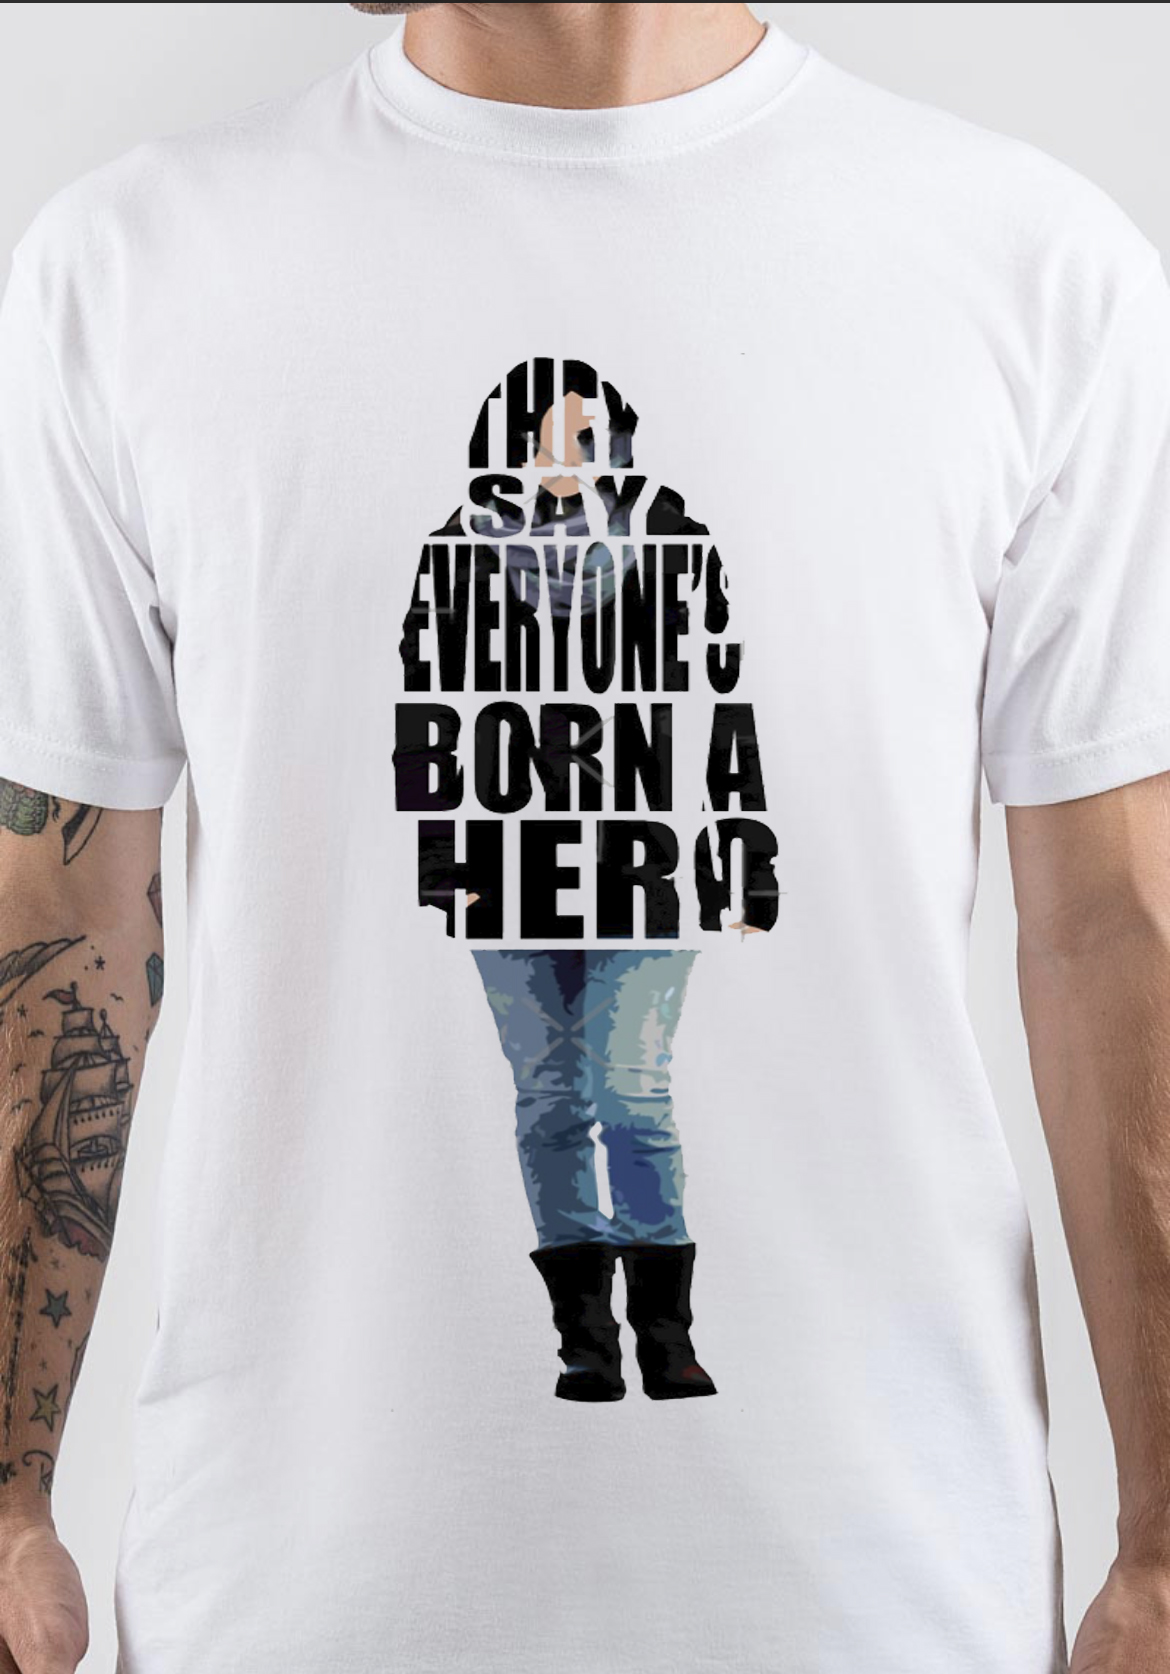 Jessica Jones T-Shirt And Merchandise